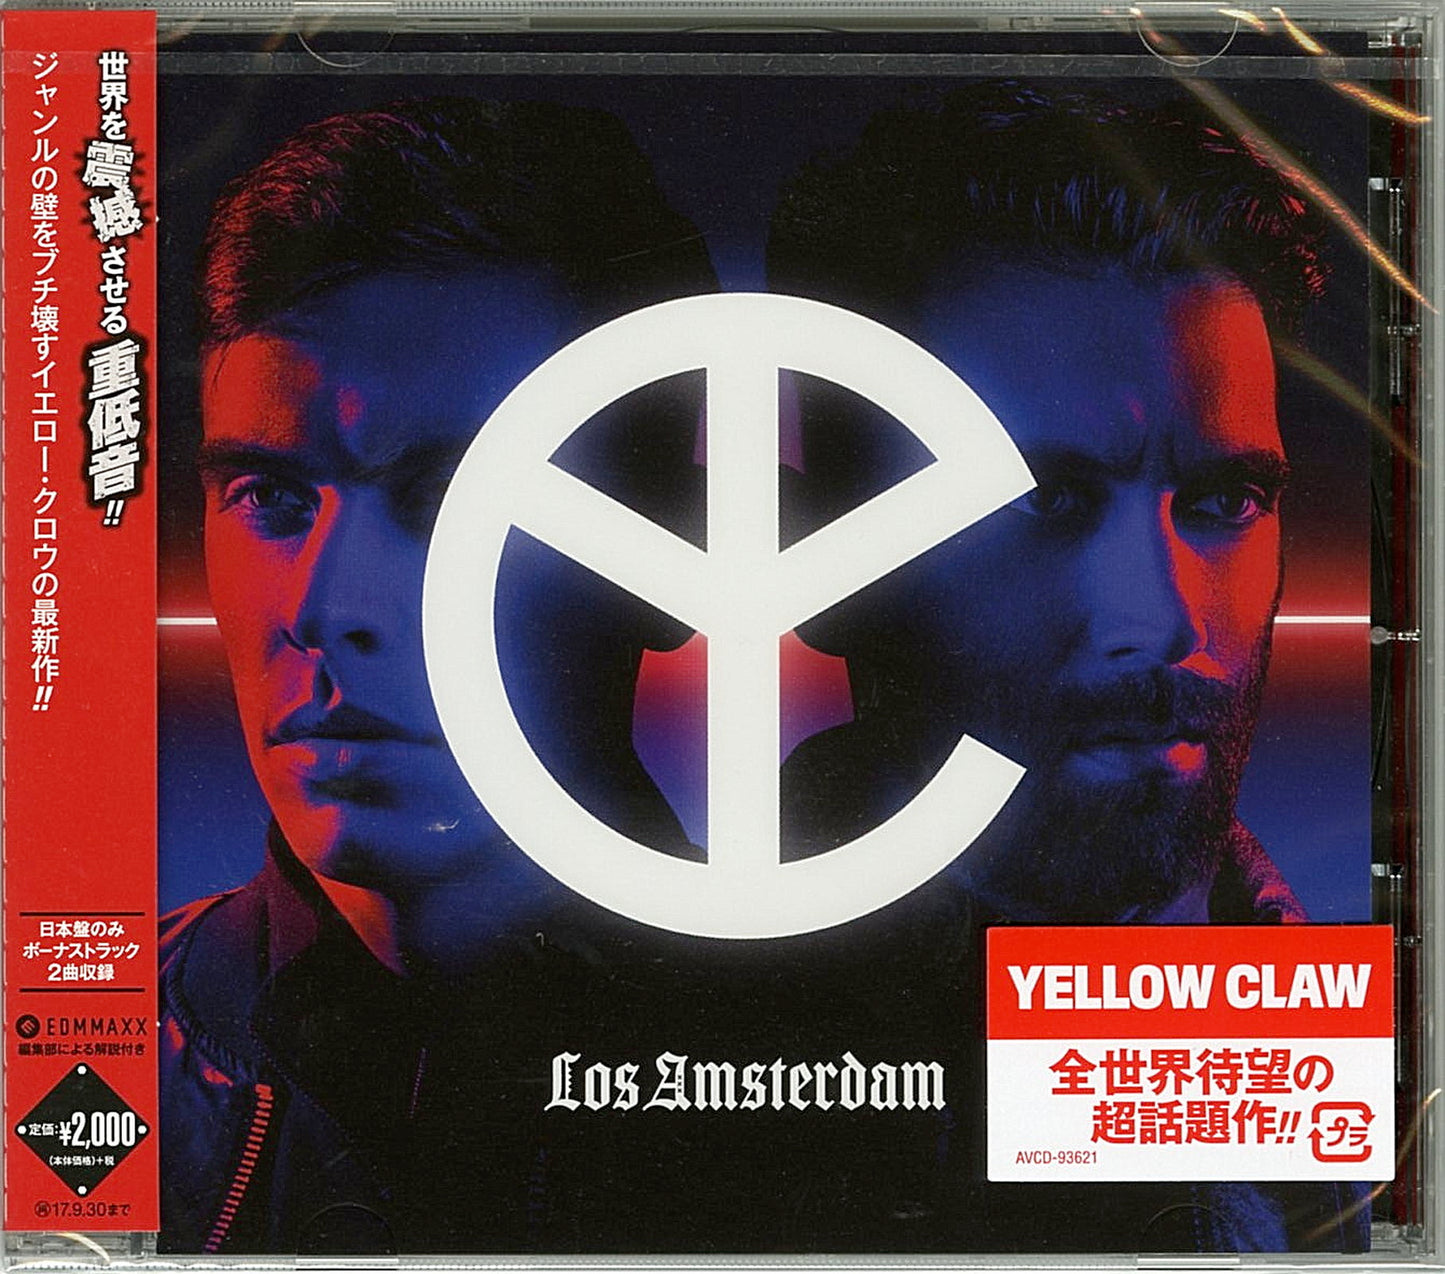 Yellow Claw - Los Amsterdam - Japan CD